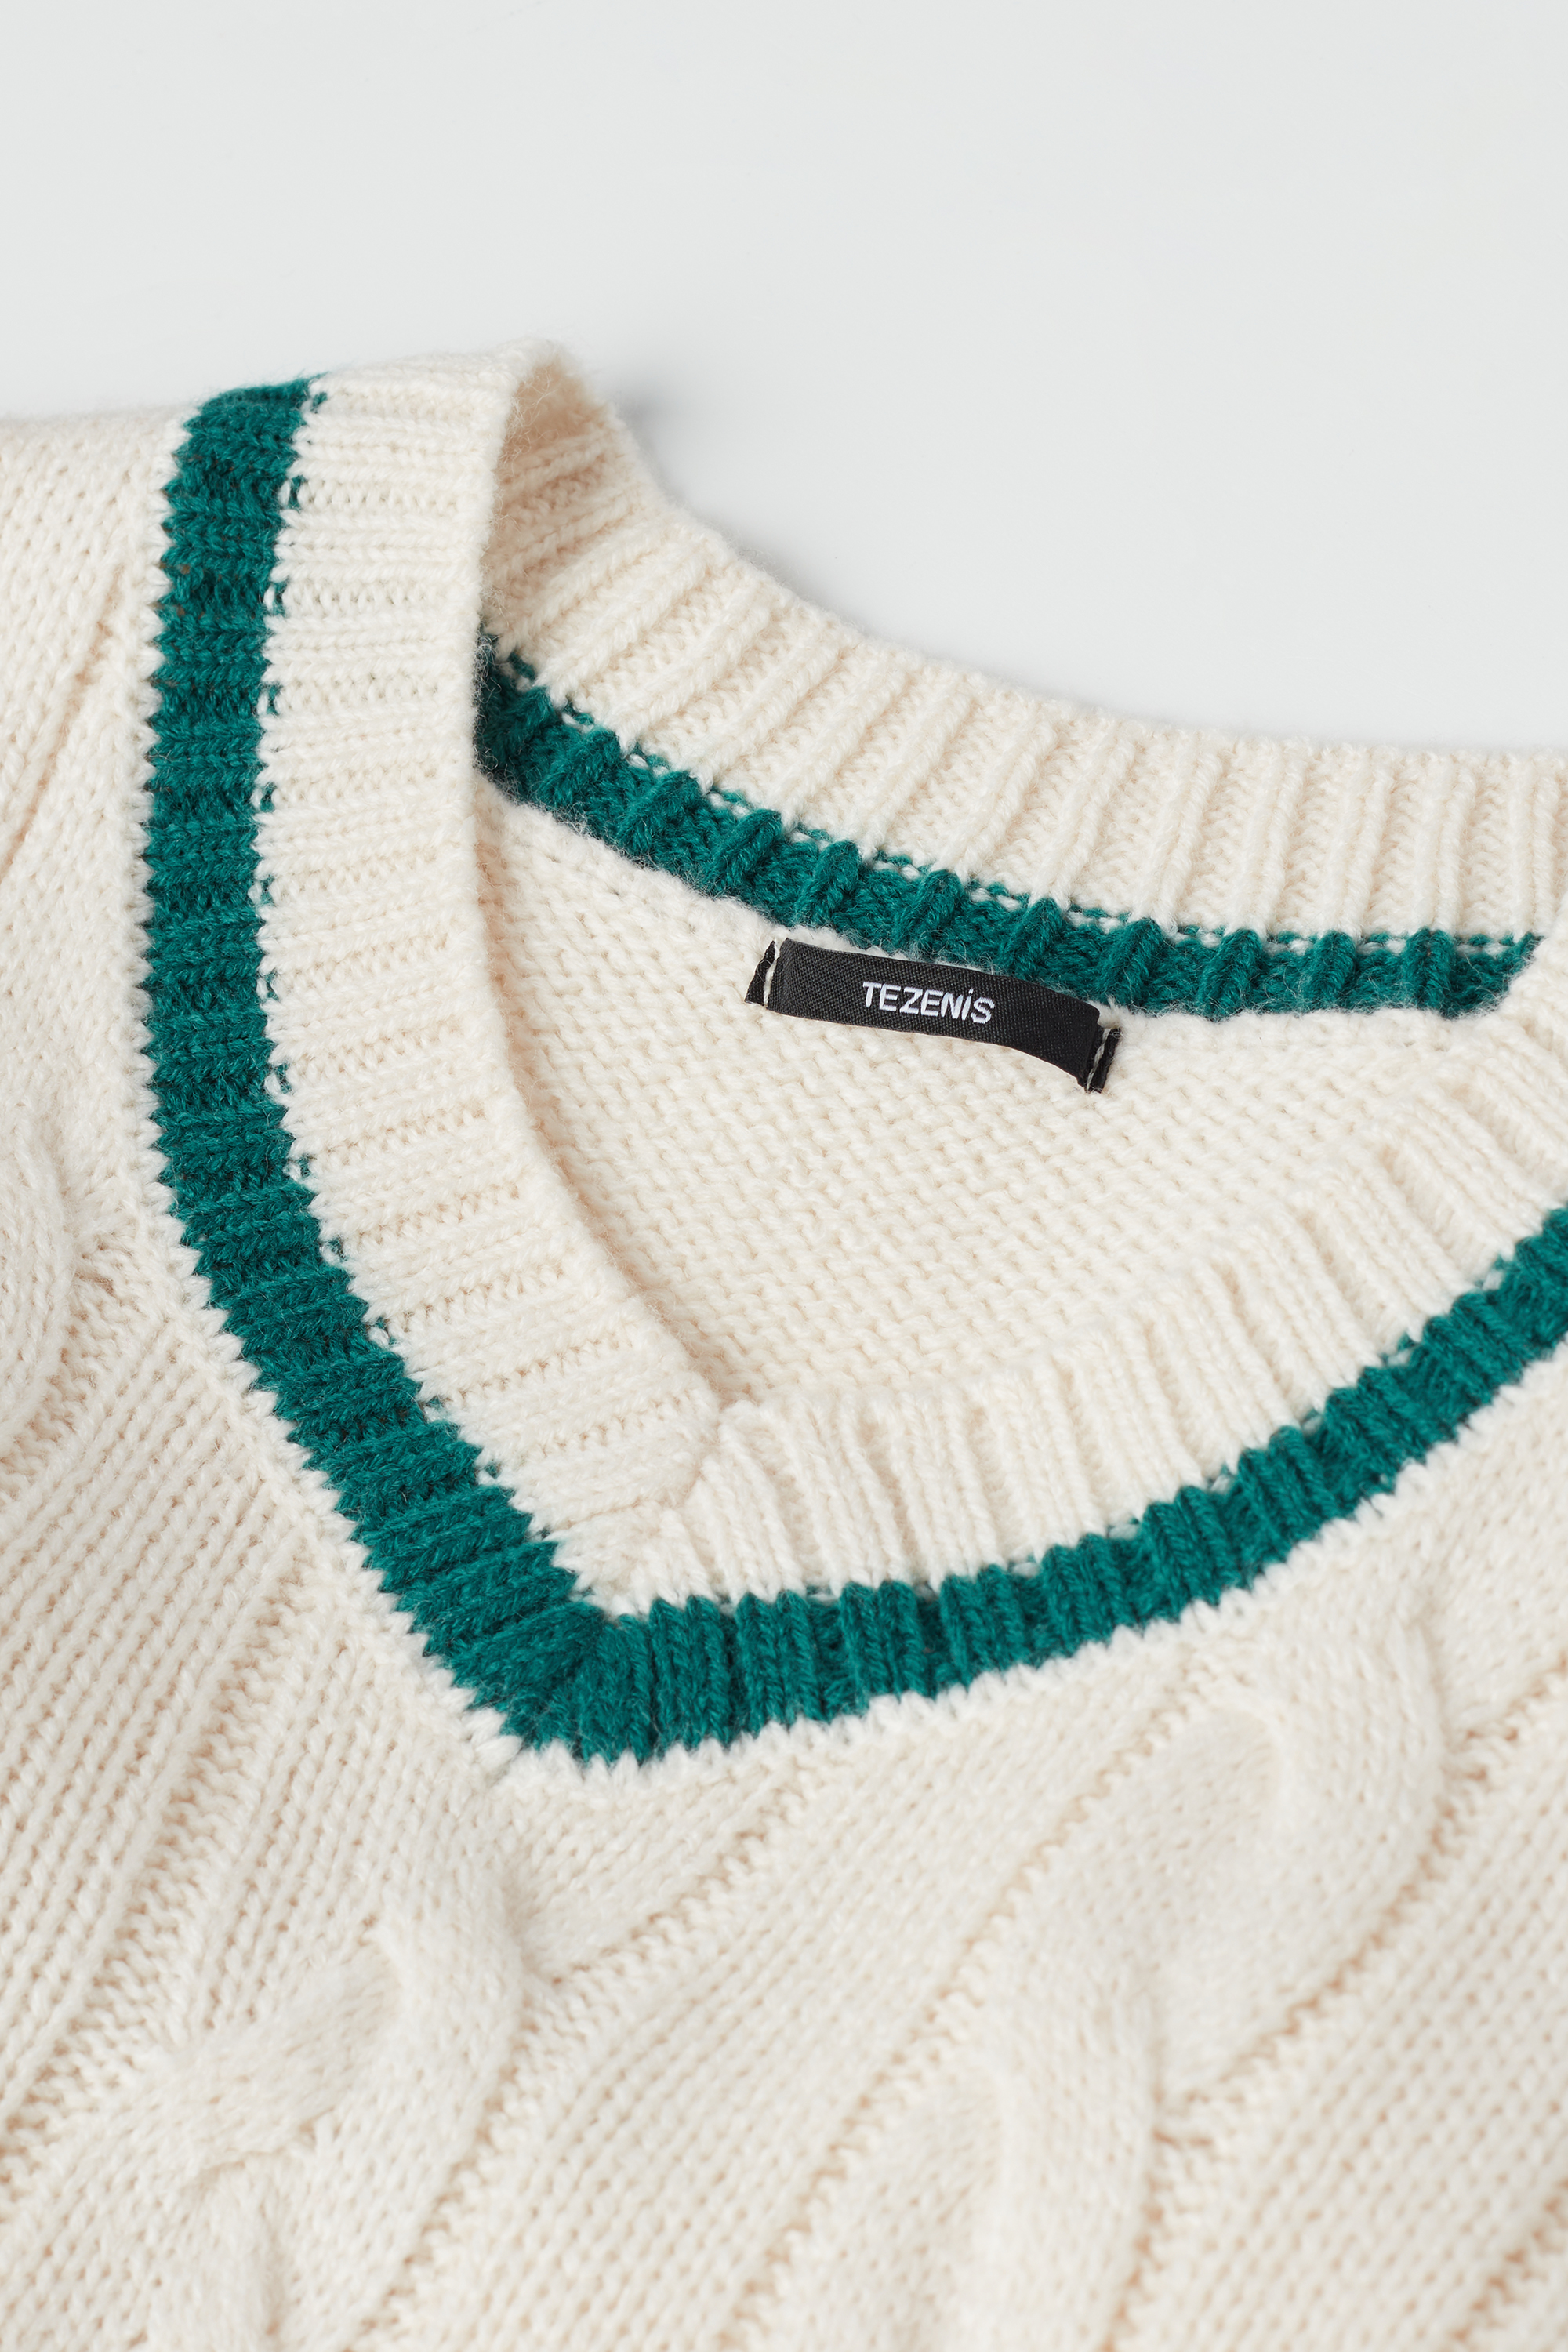 Boys’ Long-Sleeved V-Neck Braid Sweater